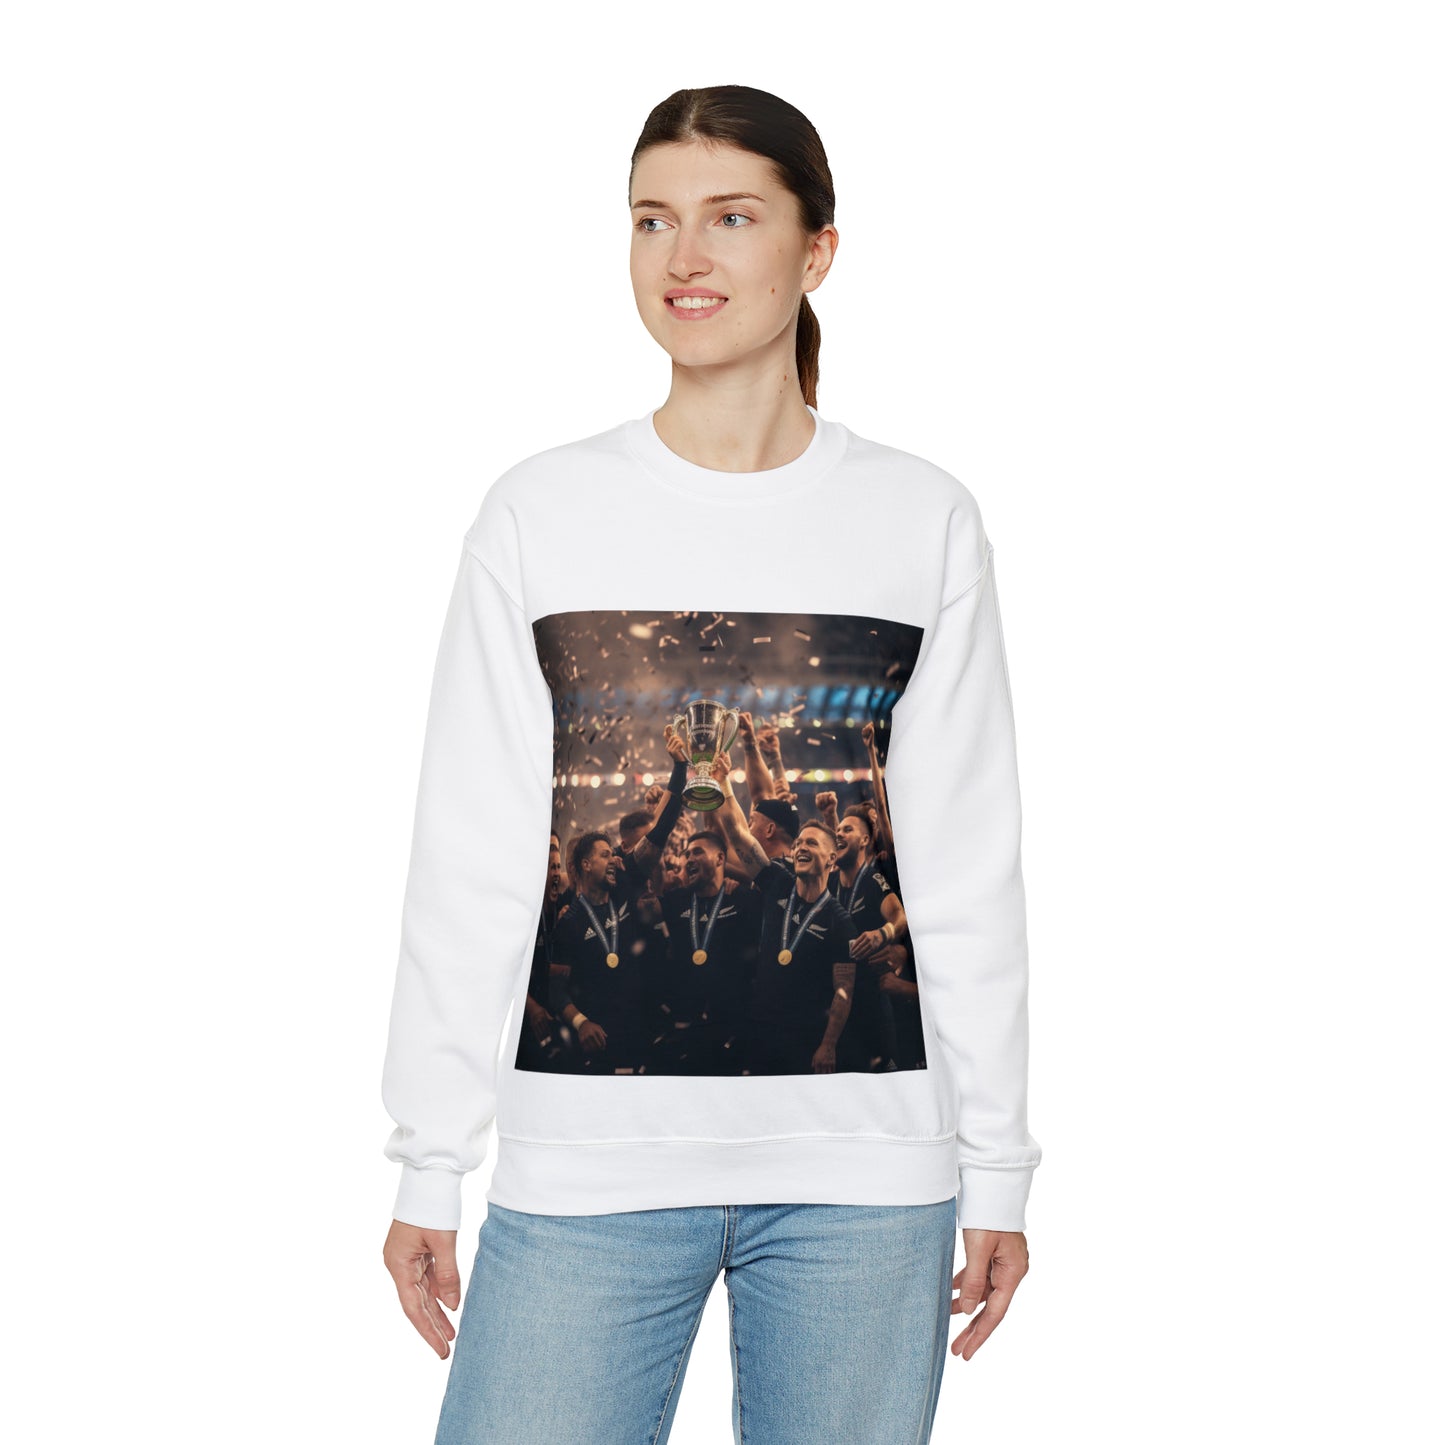 All Blacks World Cup Celebration - light sweatshirts